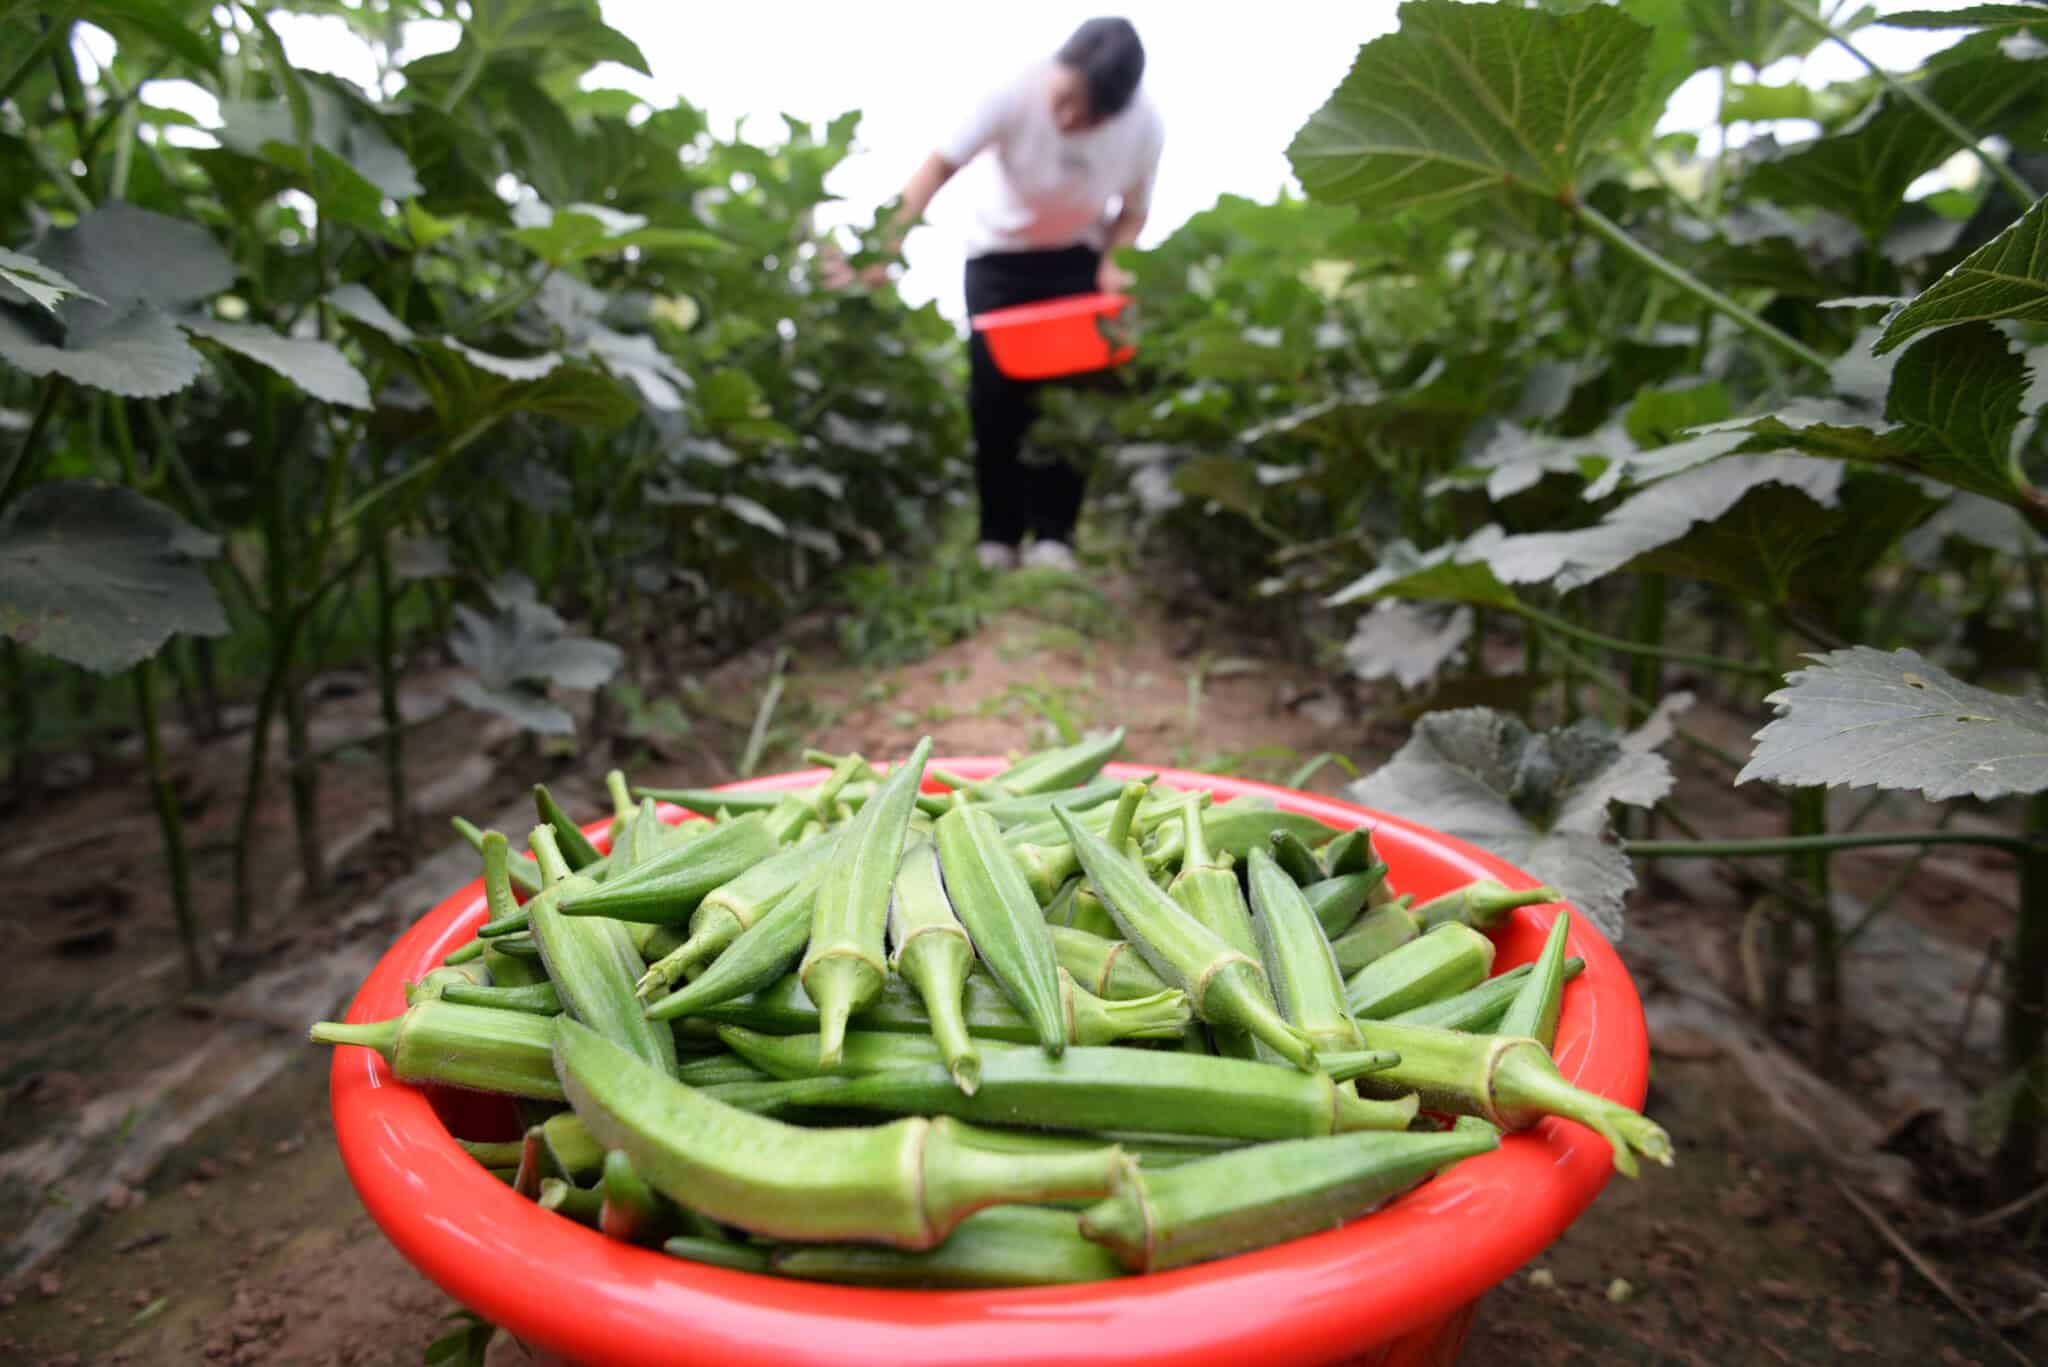 Farmers pick okra in China